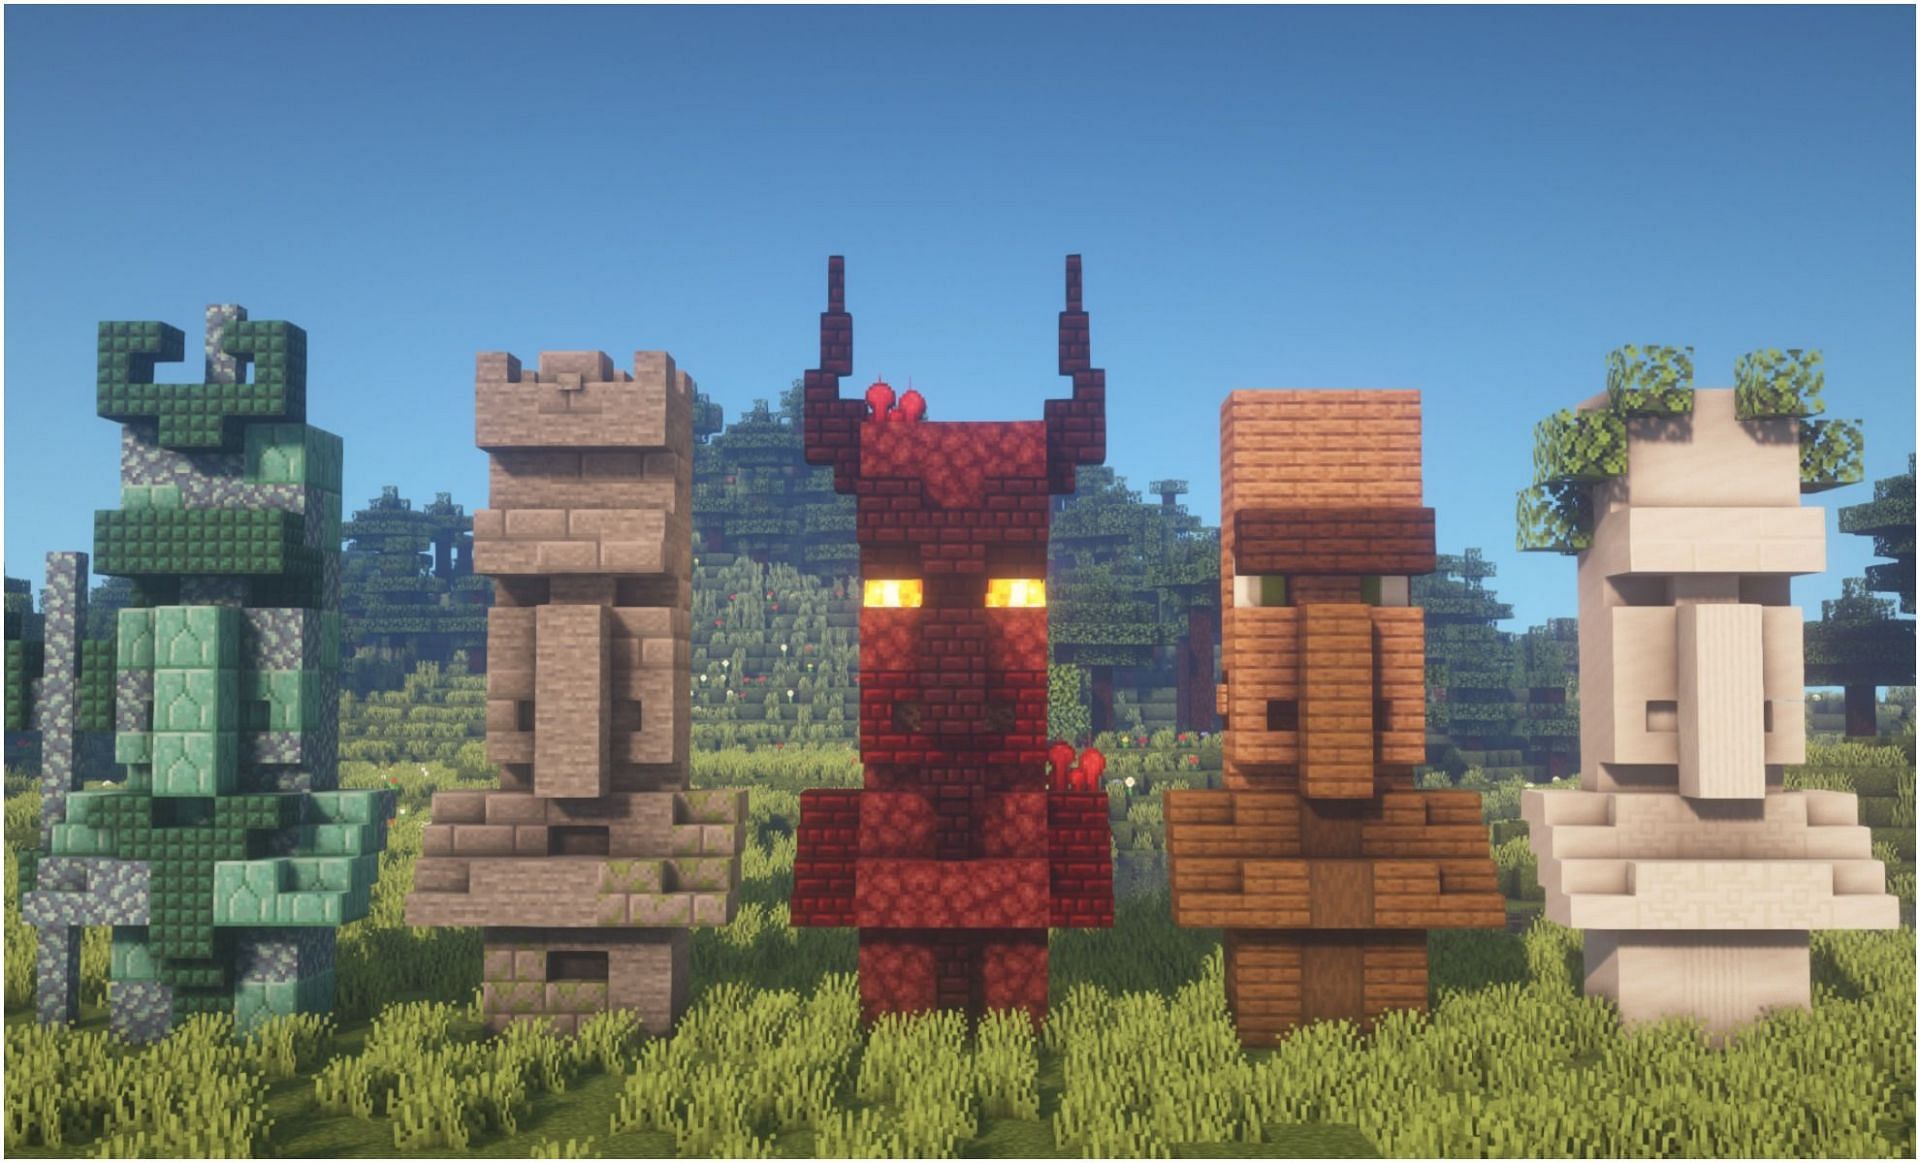 Different statues in Minecraft (Image via u/Goldrobin on Reddit)